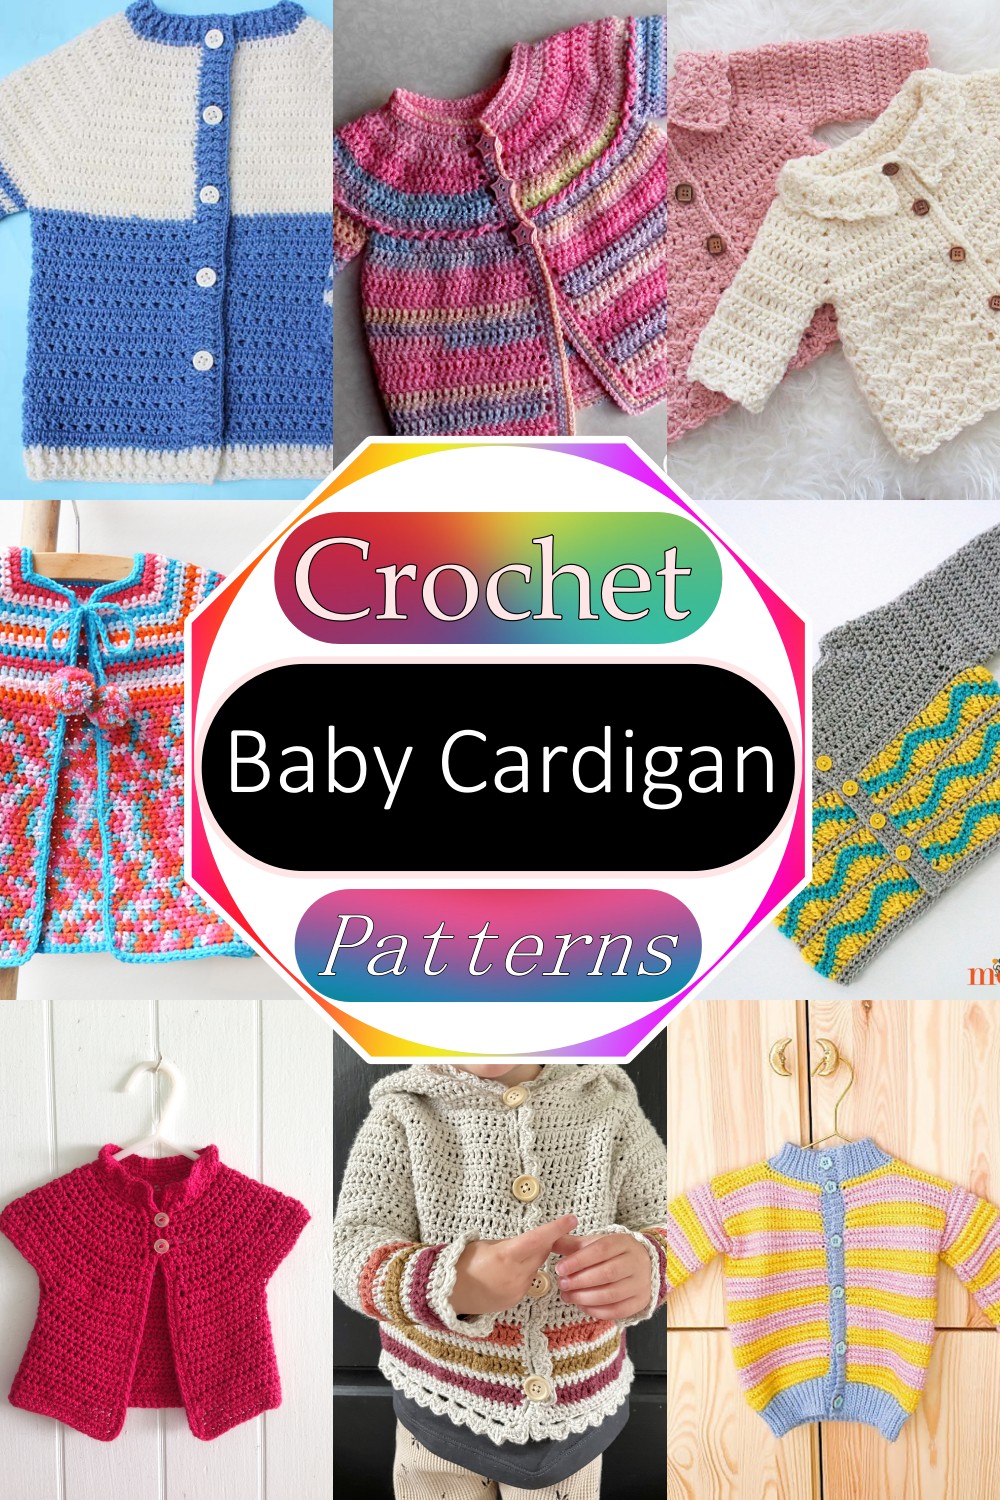 Free Crochet Baby Cardigan Patterns